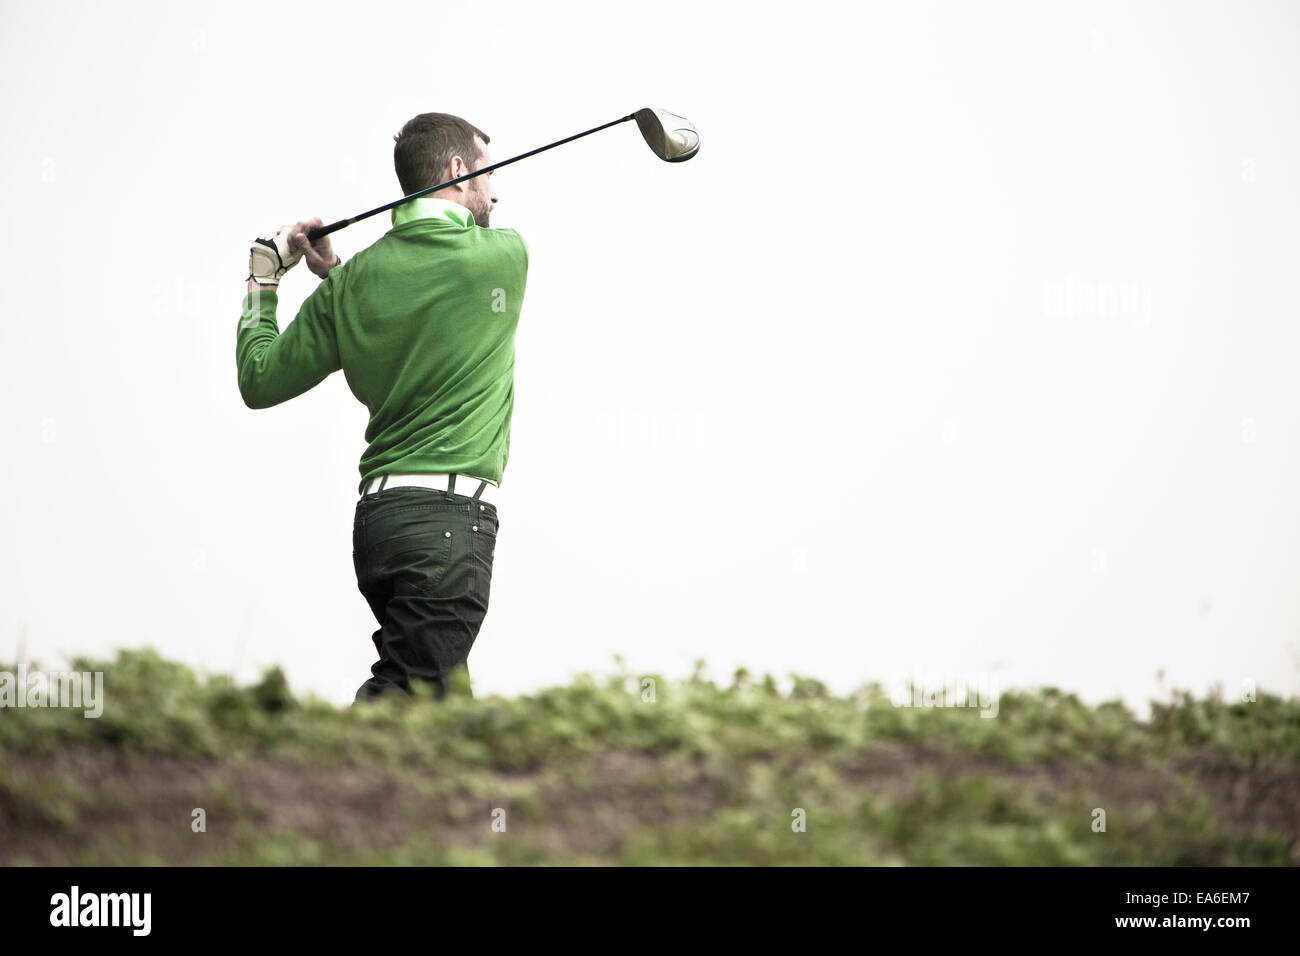 Homme jouant au golf, Irlande Banque D'Images